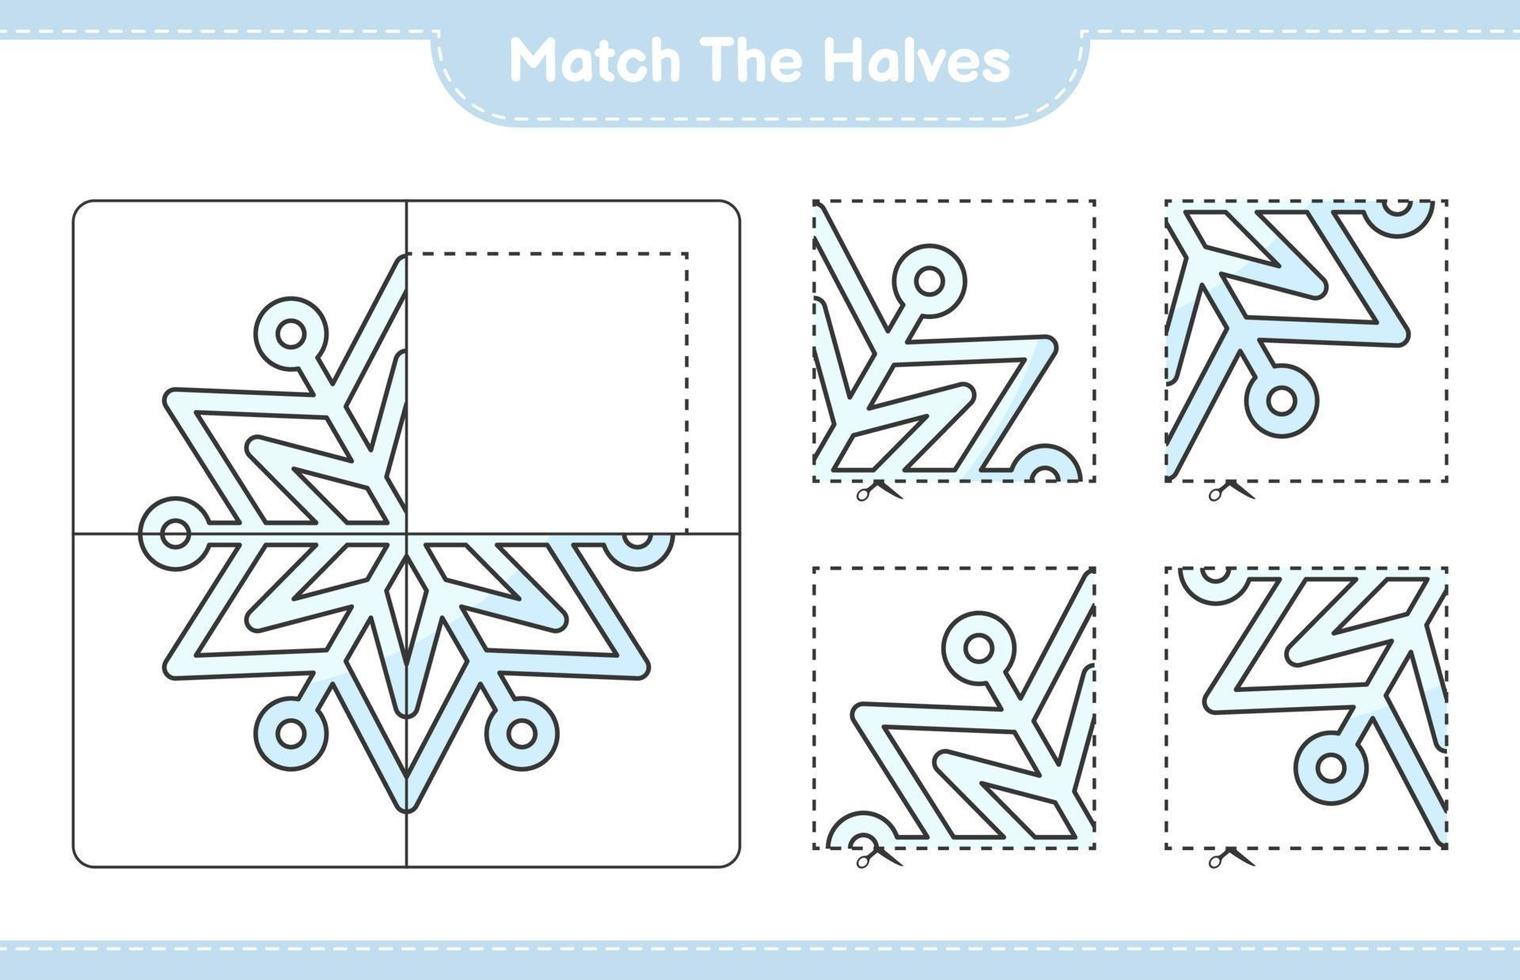 Match the halves. Match halves of Snowflake. Educational children game, printable worksheet, vector illustration